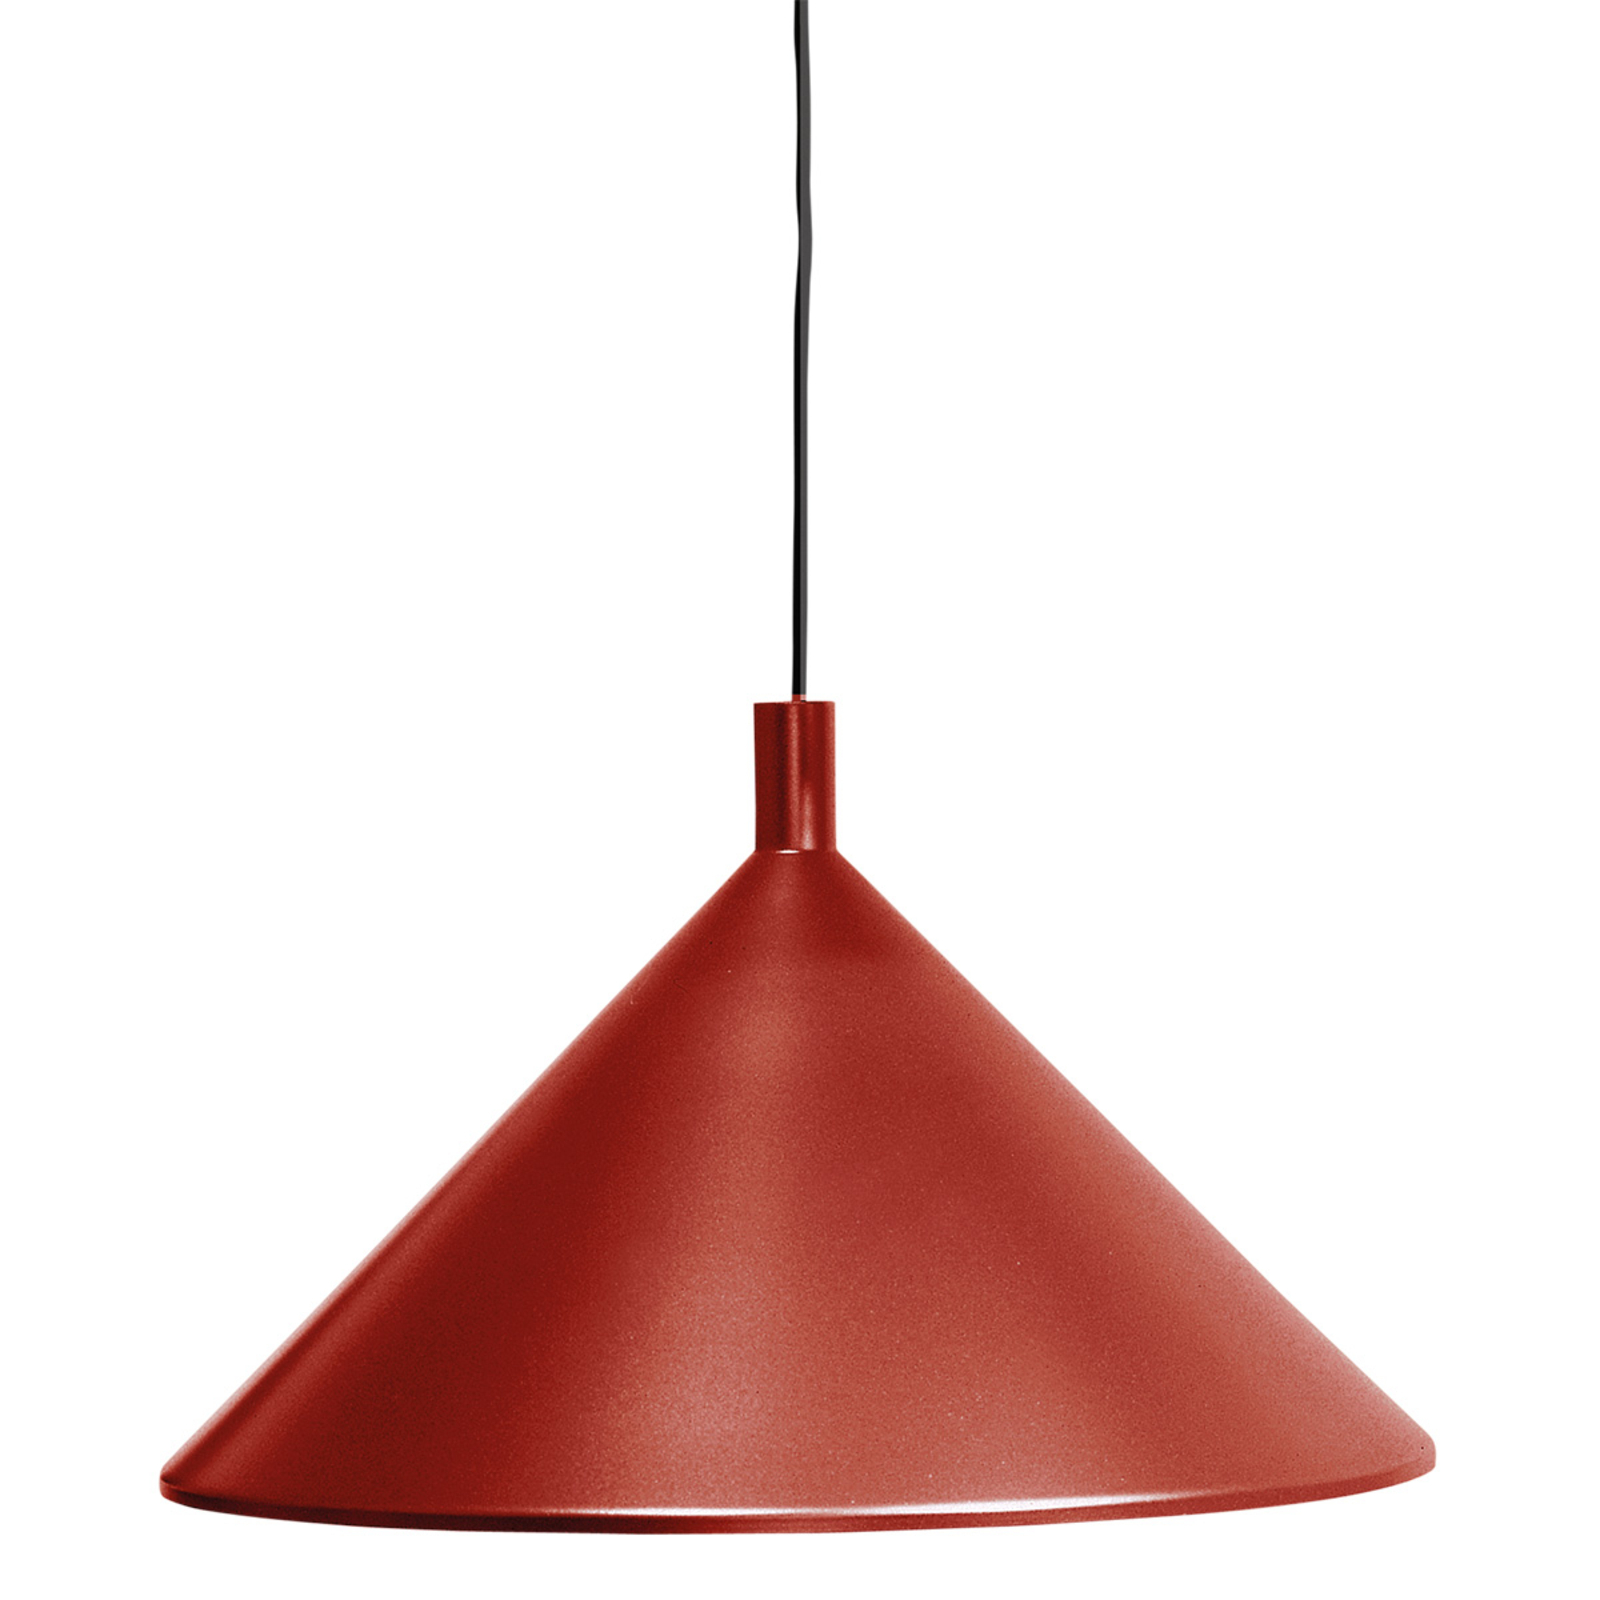 Martinelli Luce Cono függő lámpa, piros, Ø 45 cm